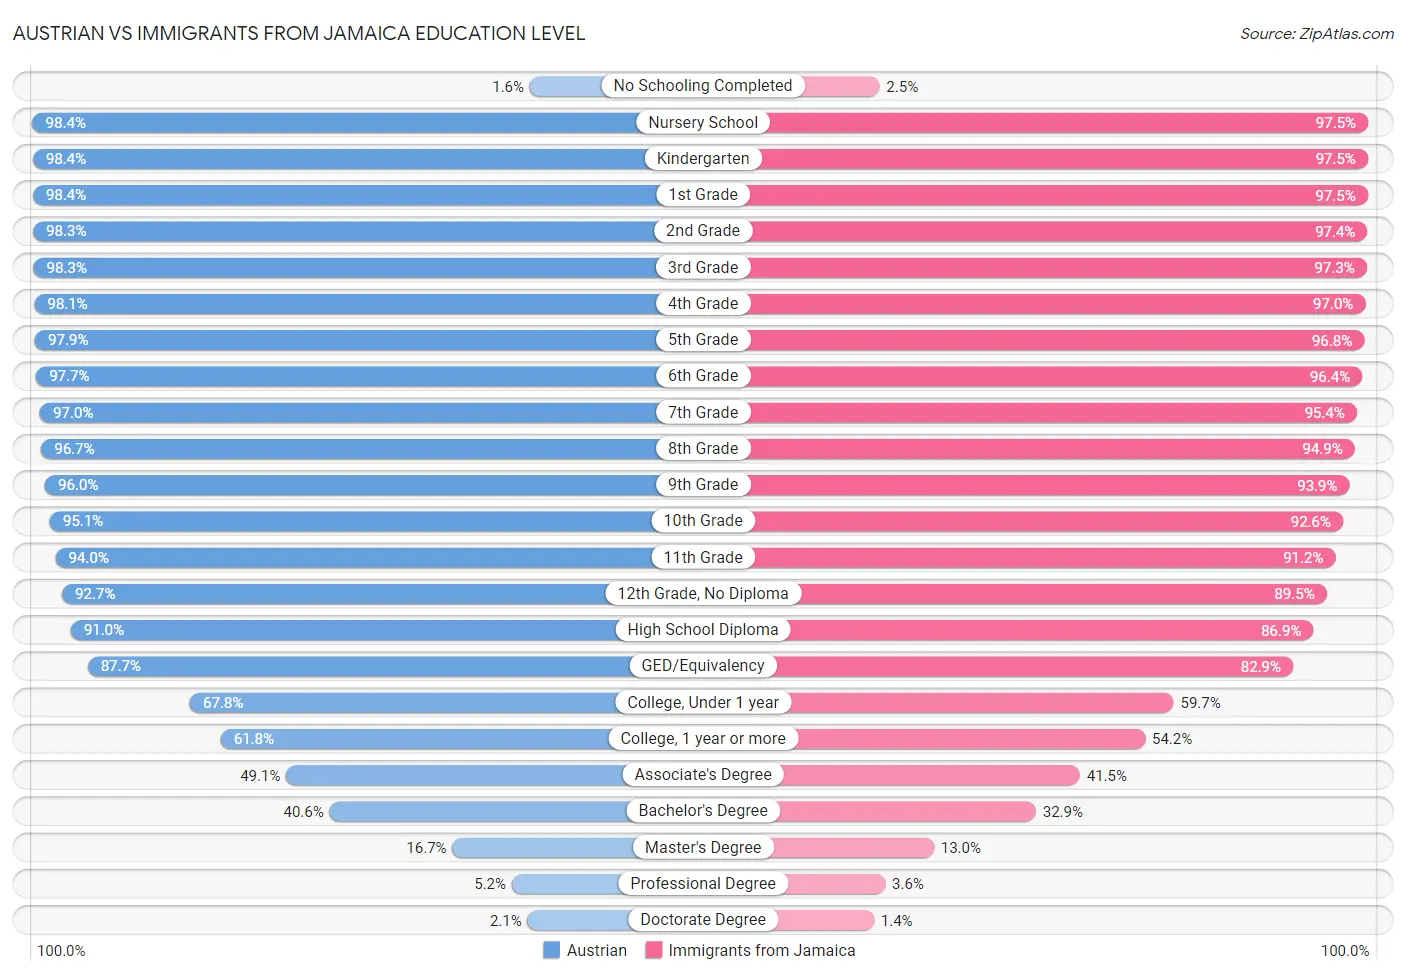 Austrian vs Immigrants from Jamaica Education Level